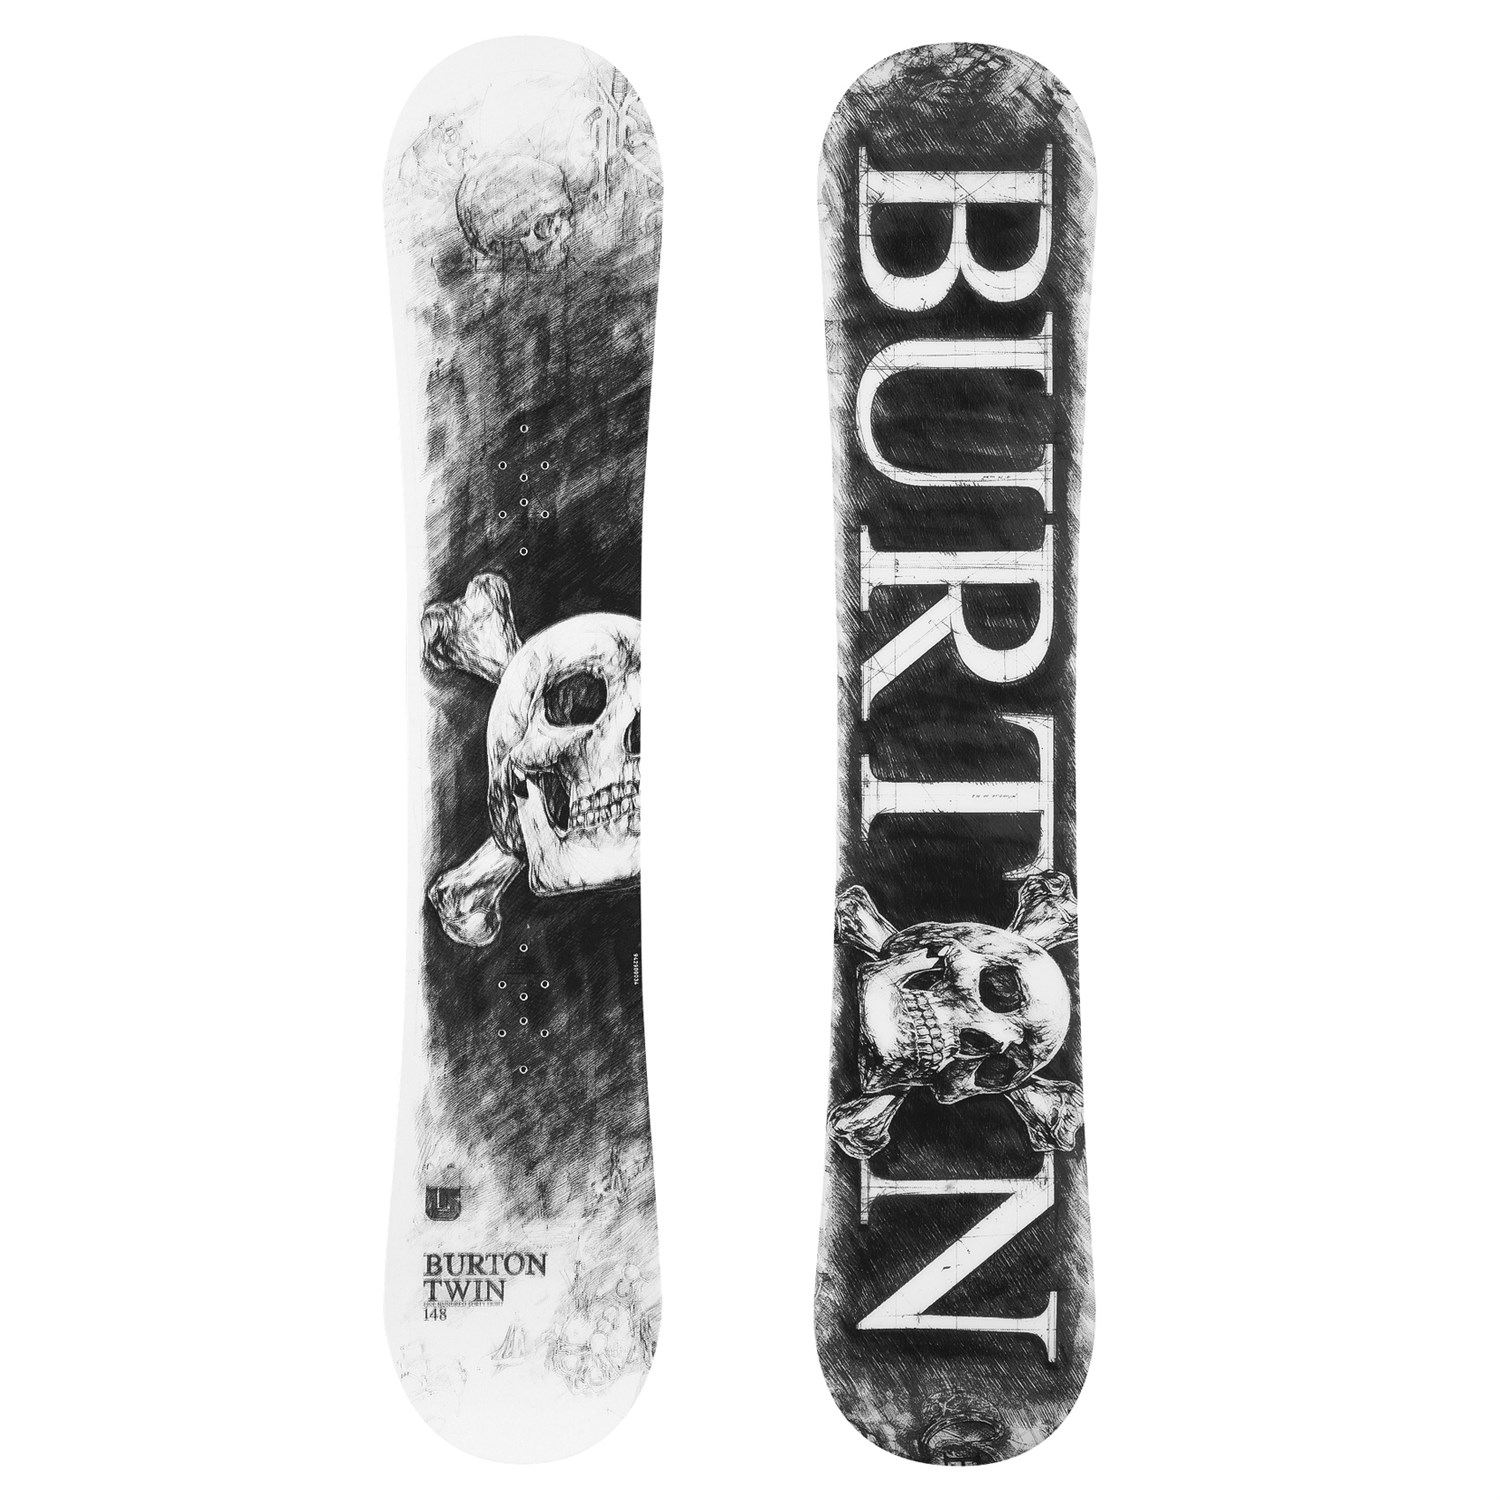 Ontrouw ochtendgloren eerlijk Burton Twin Snowboard (Black) 2008 | evo